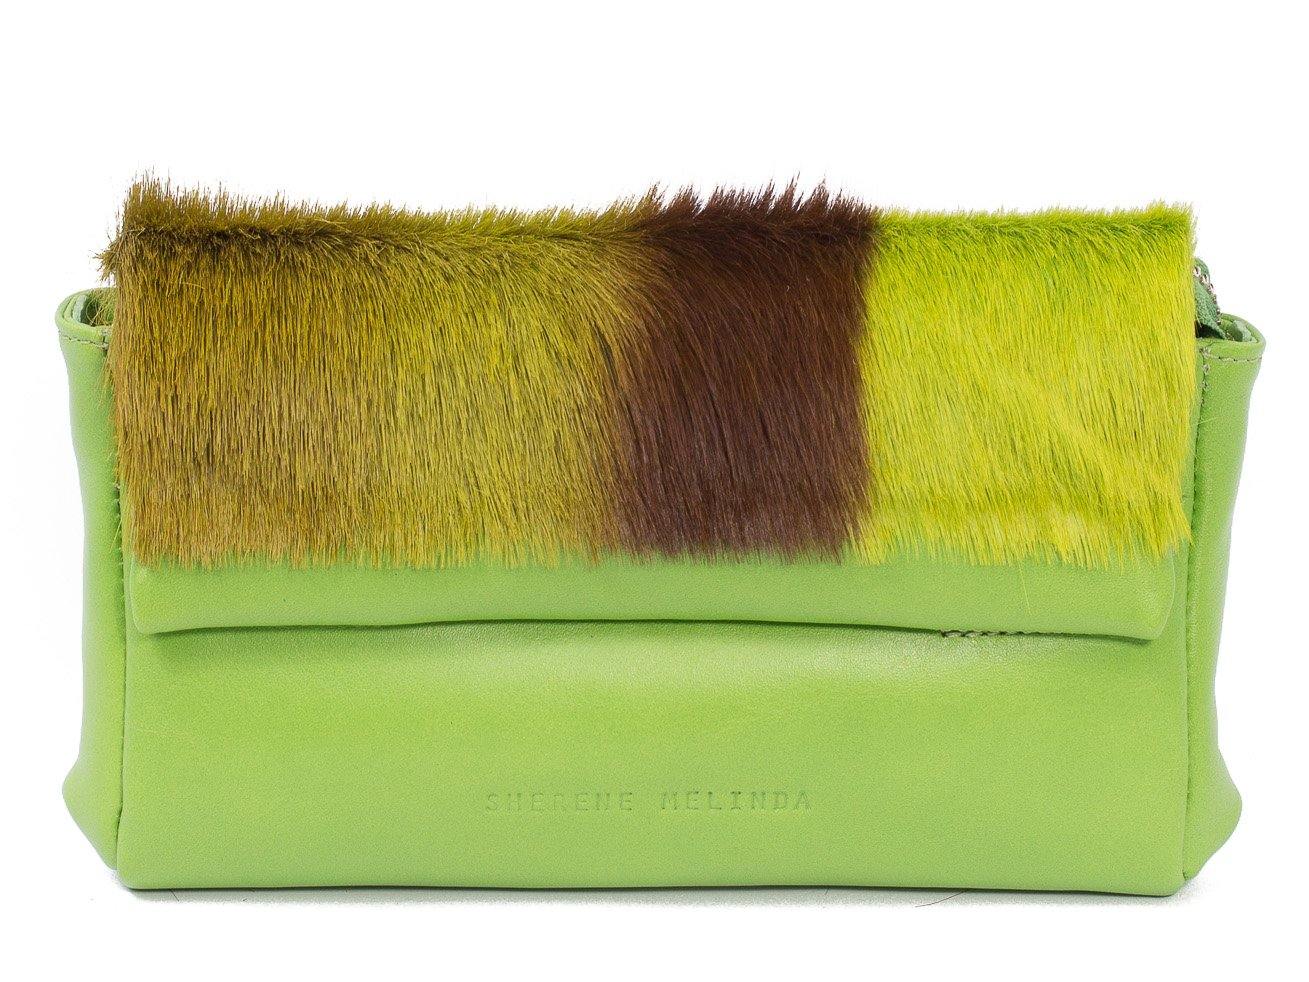 sherene melinda springbok hair-on-hide lime green leather Sophy SS18 Clutch Bag Stripe front